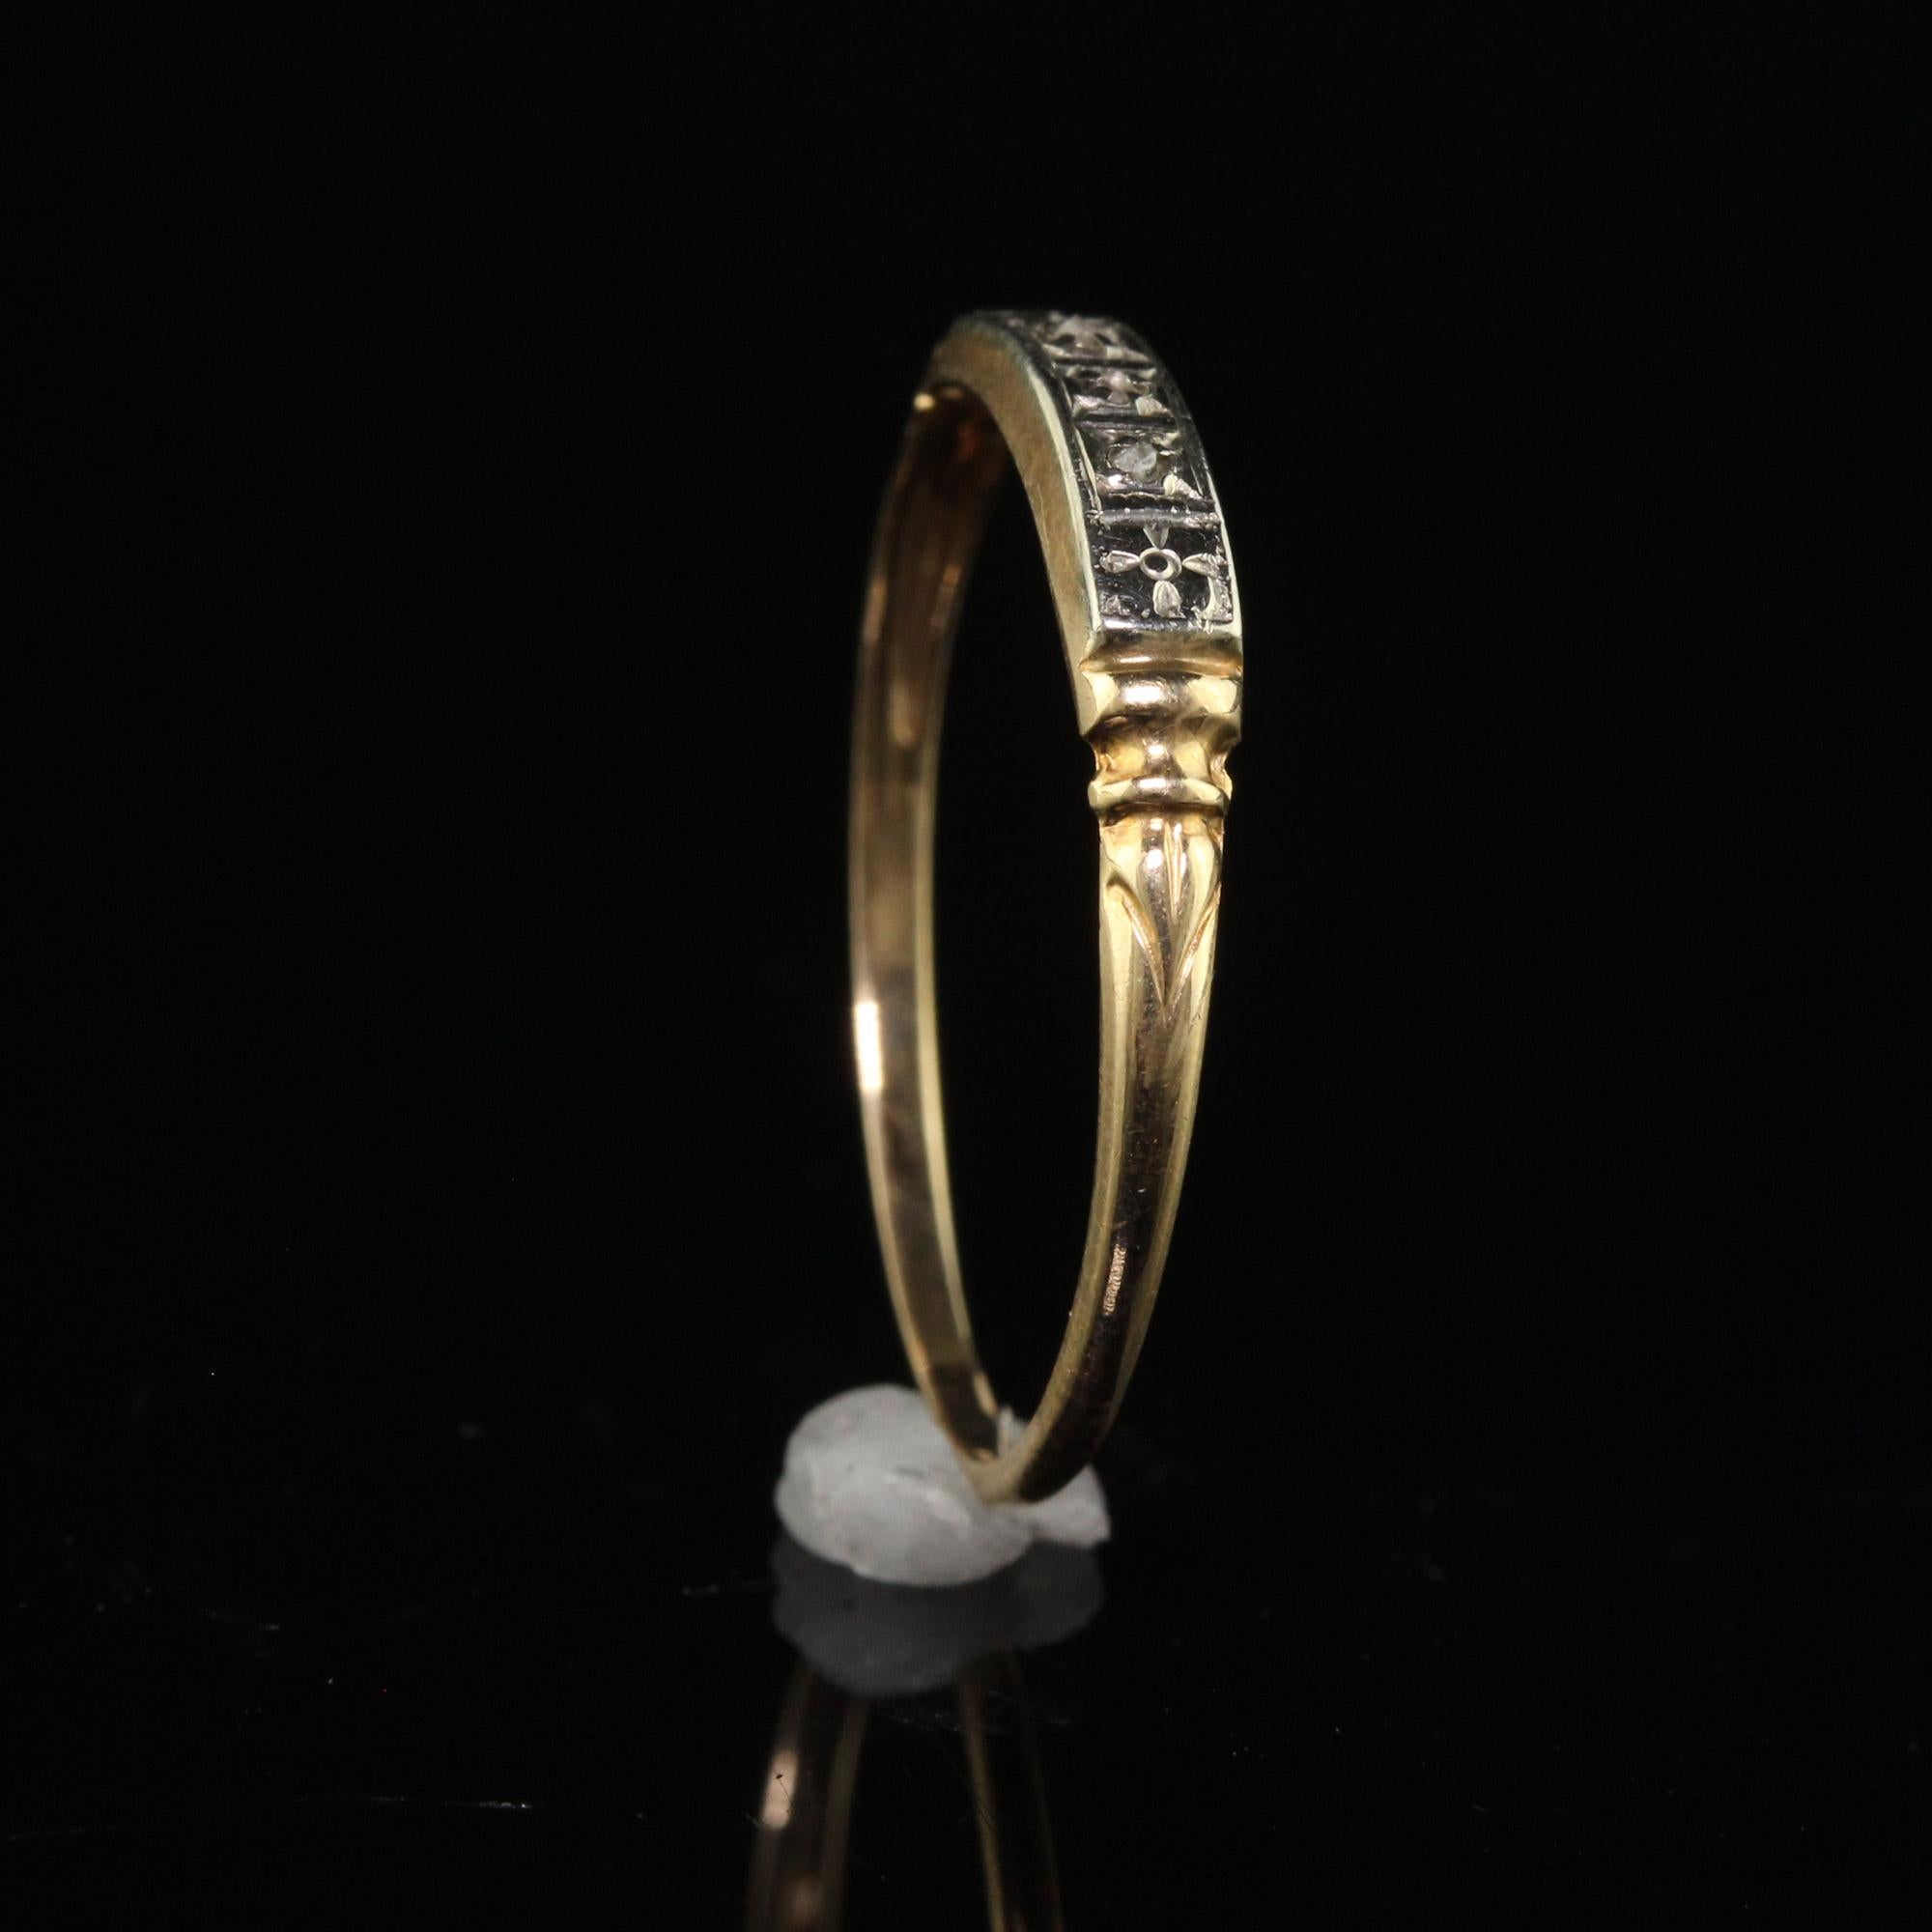 Antique Art Deco 14K Yellow Gold Rose Cut Diamond Wedding Band - Size 6 1/4 For Sale 1